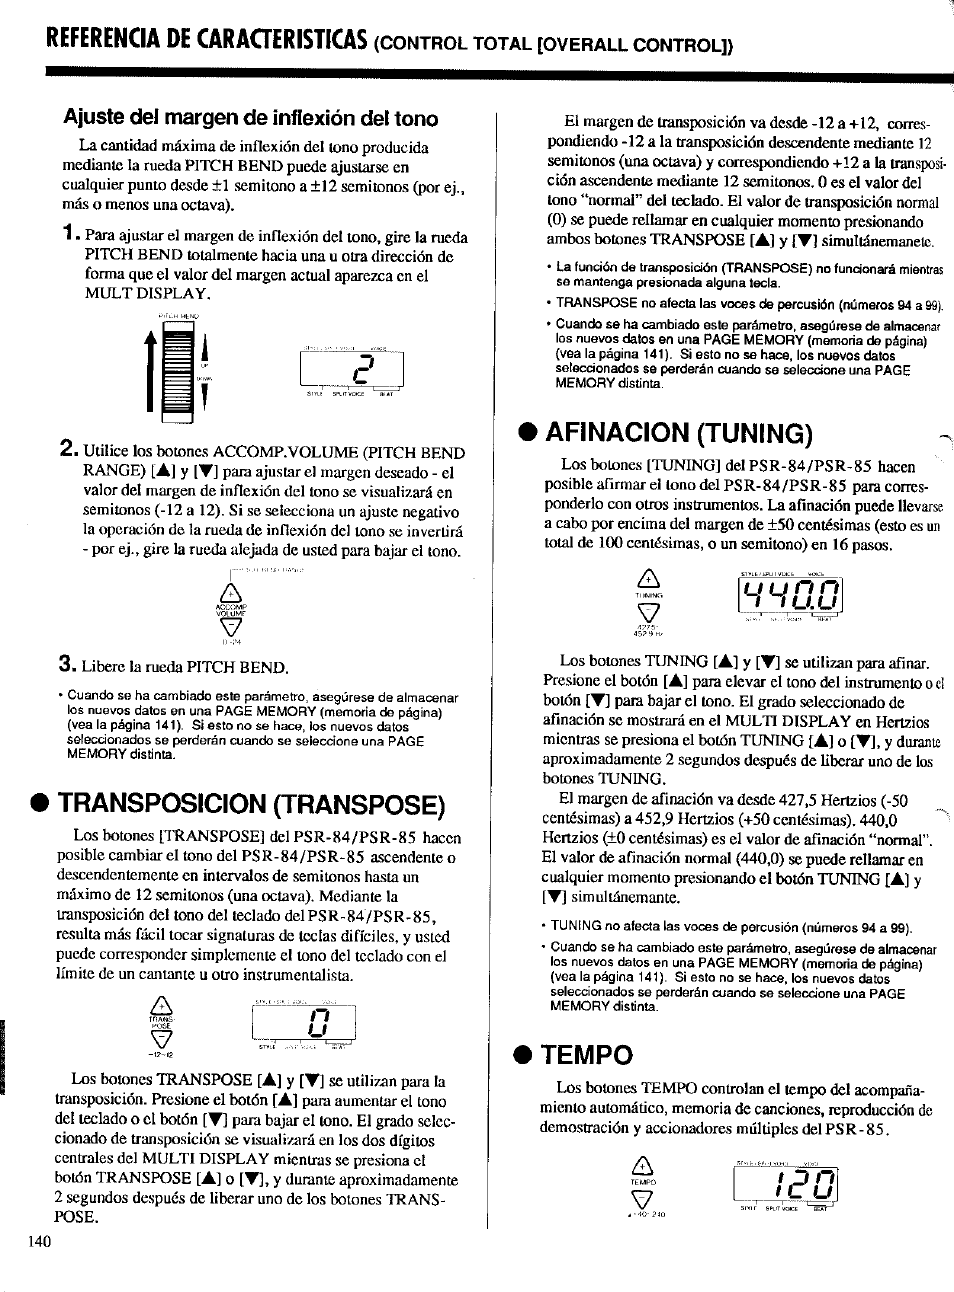 Libere la rueda pitch bend, Transposicion (transpose), Afinacion (tuning) | Tempo, Referencia de cara0eristicas, T p n | Yamaha Portatone PSR-85 Manual del usuario | Página 14 / 48